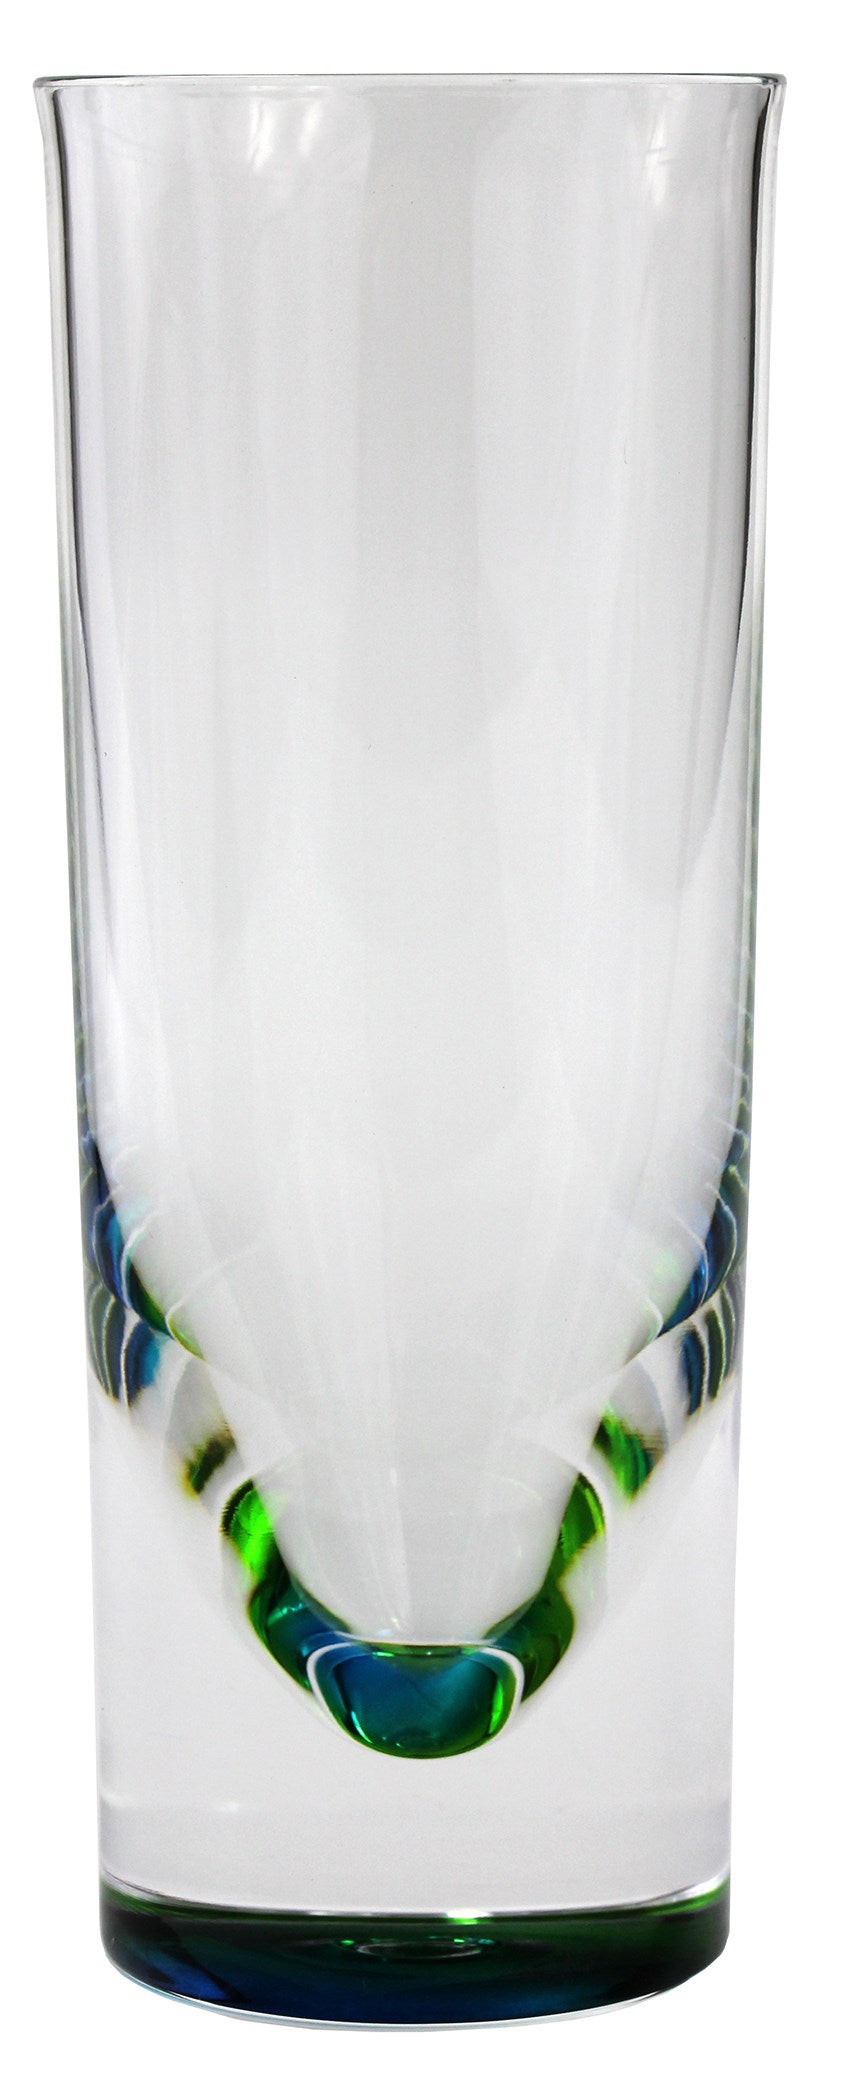 JENSEN DISTRIBUTIONS SERVICES, Merritt International Peacock Teardrop Clear BPA Free Tumbler (gobelet transparent sans BPA)